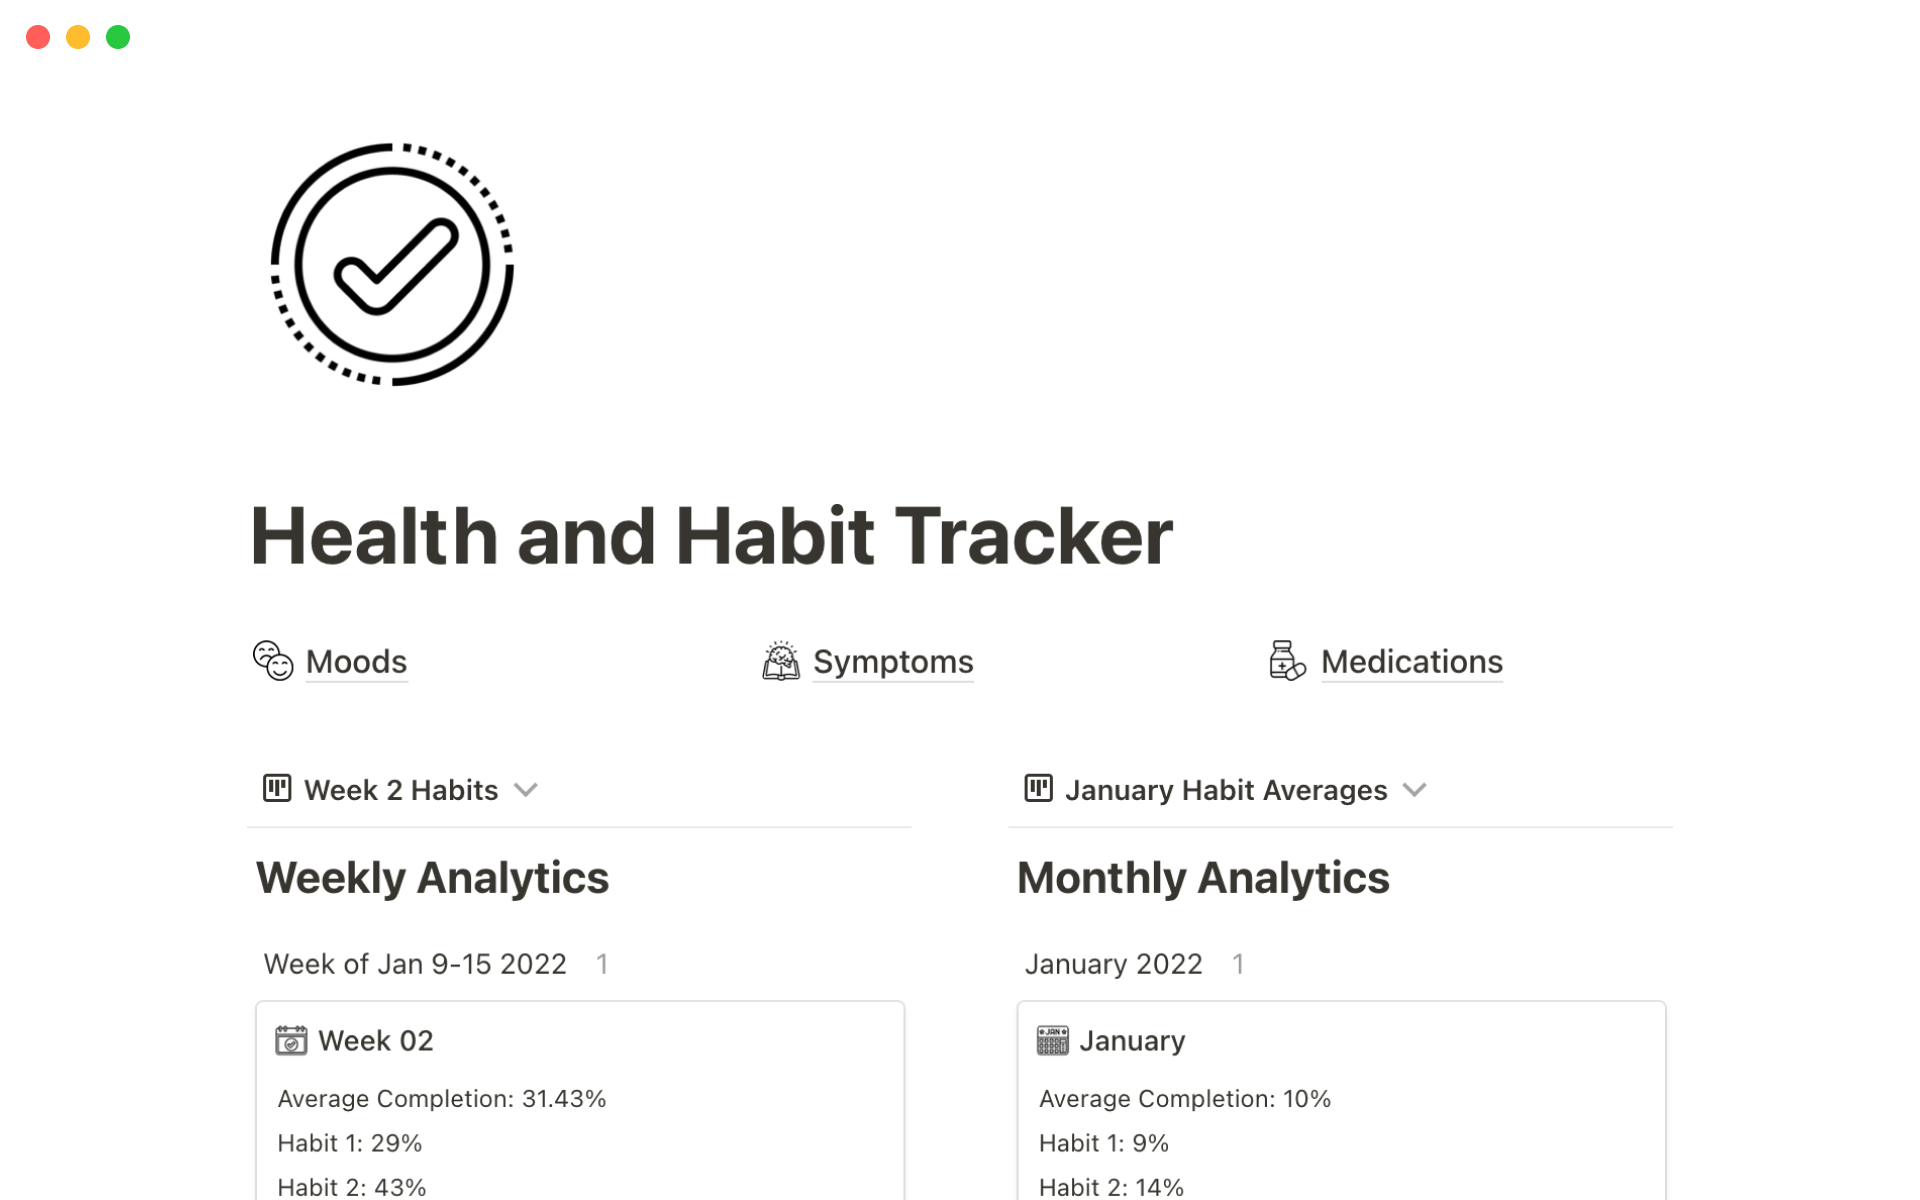 notion-template-gallery-health-habit-tracker